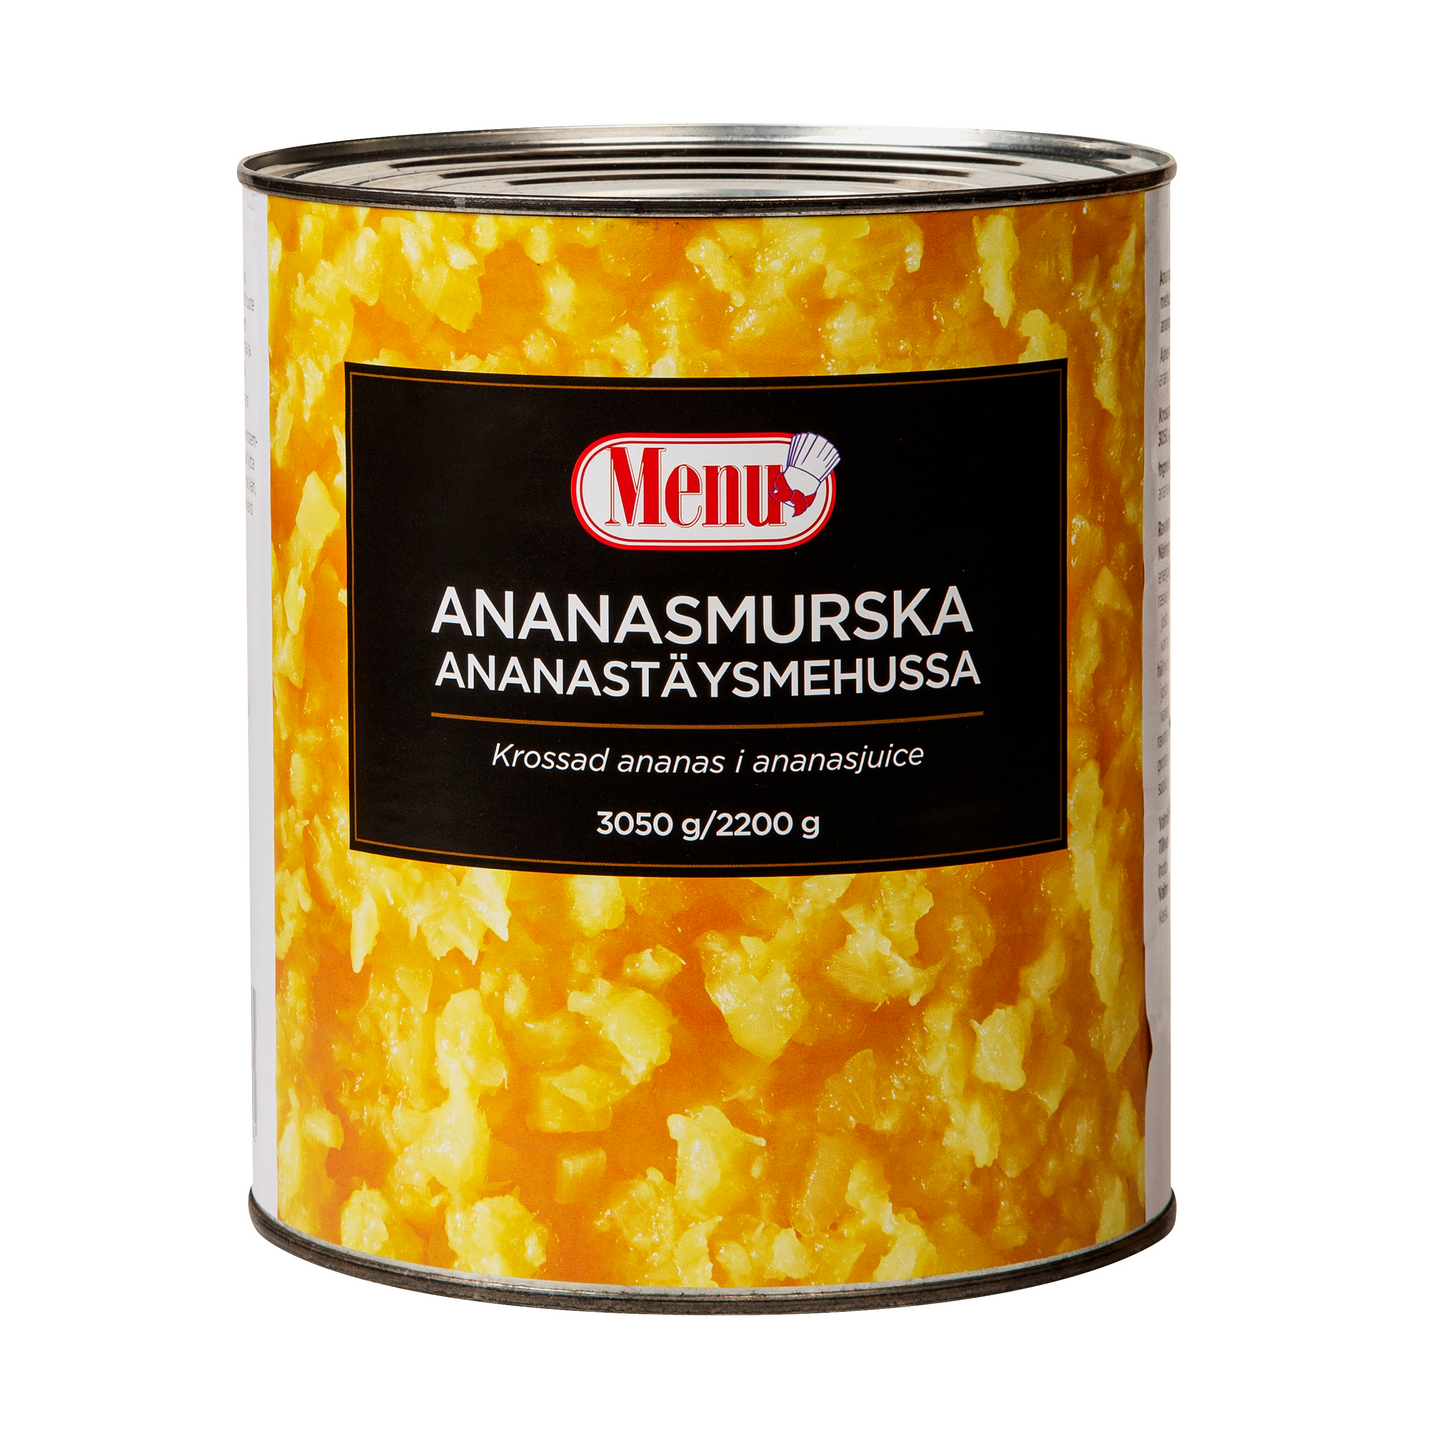 Menu ananasmurska ananasmehussa 3050g/2200g